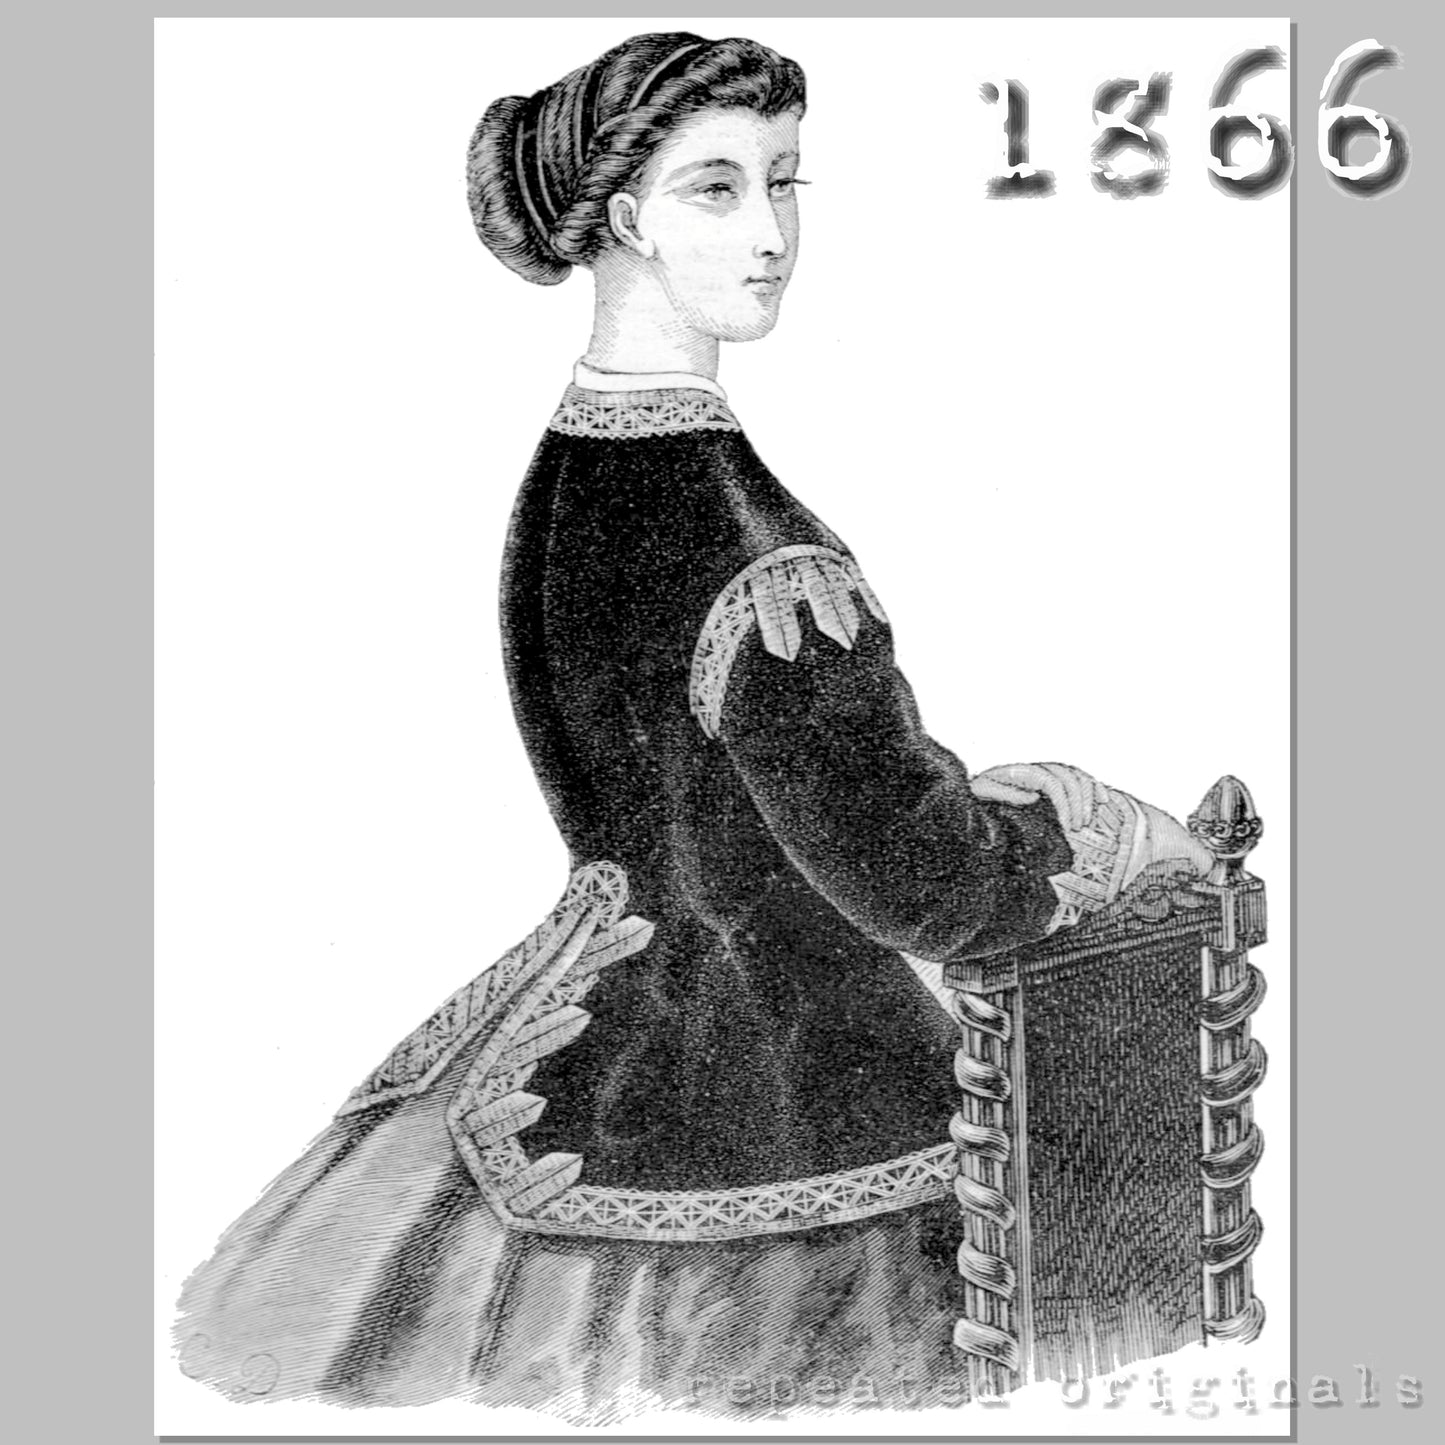 1866 Jacket /  Coat / Pardessus Sewing Pattern - INSTANT DOWNLOAD PDF